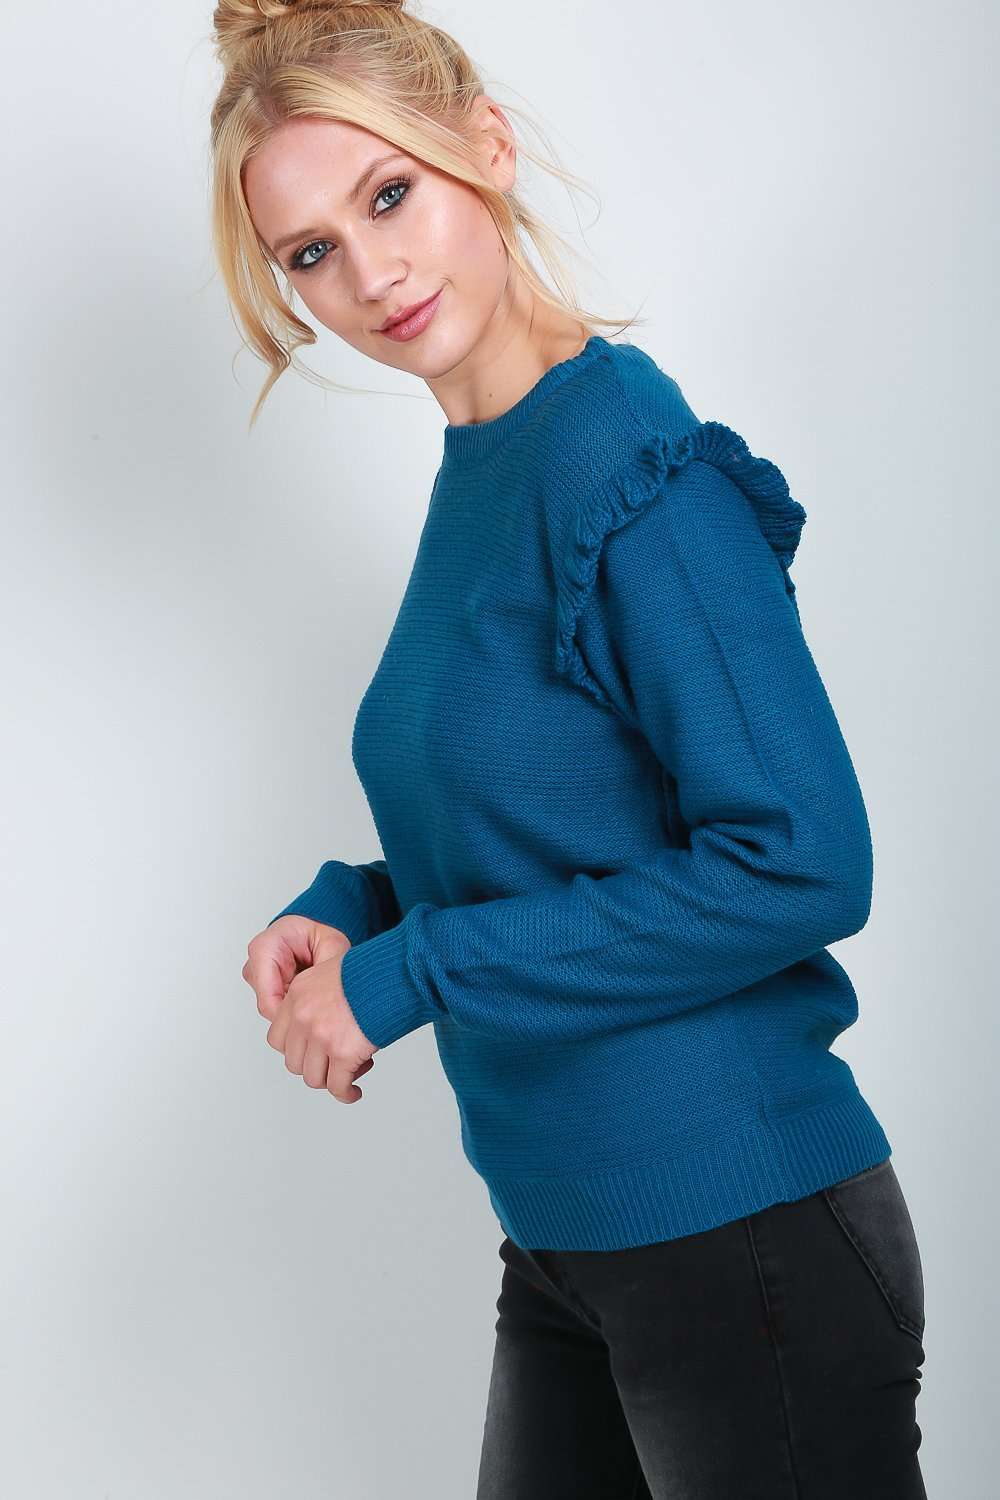 Nancy Long Sleeve Frilly Knitted Jumper - bejealous-com